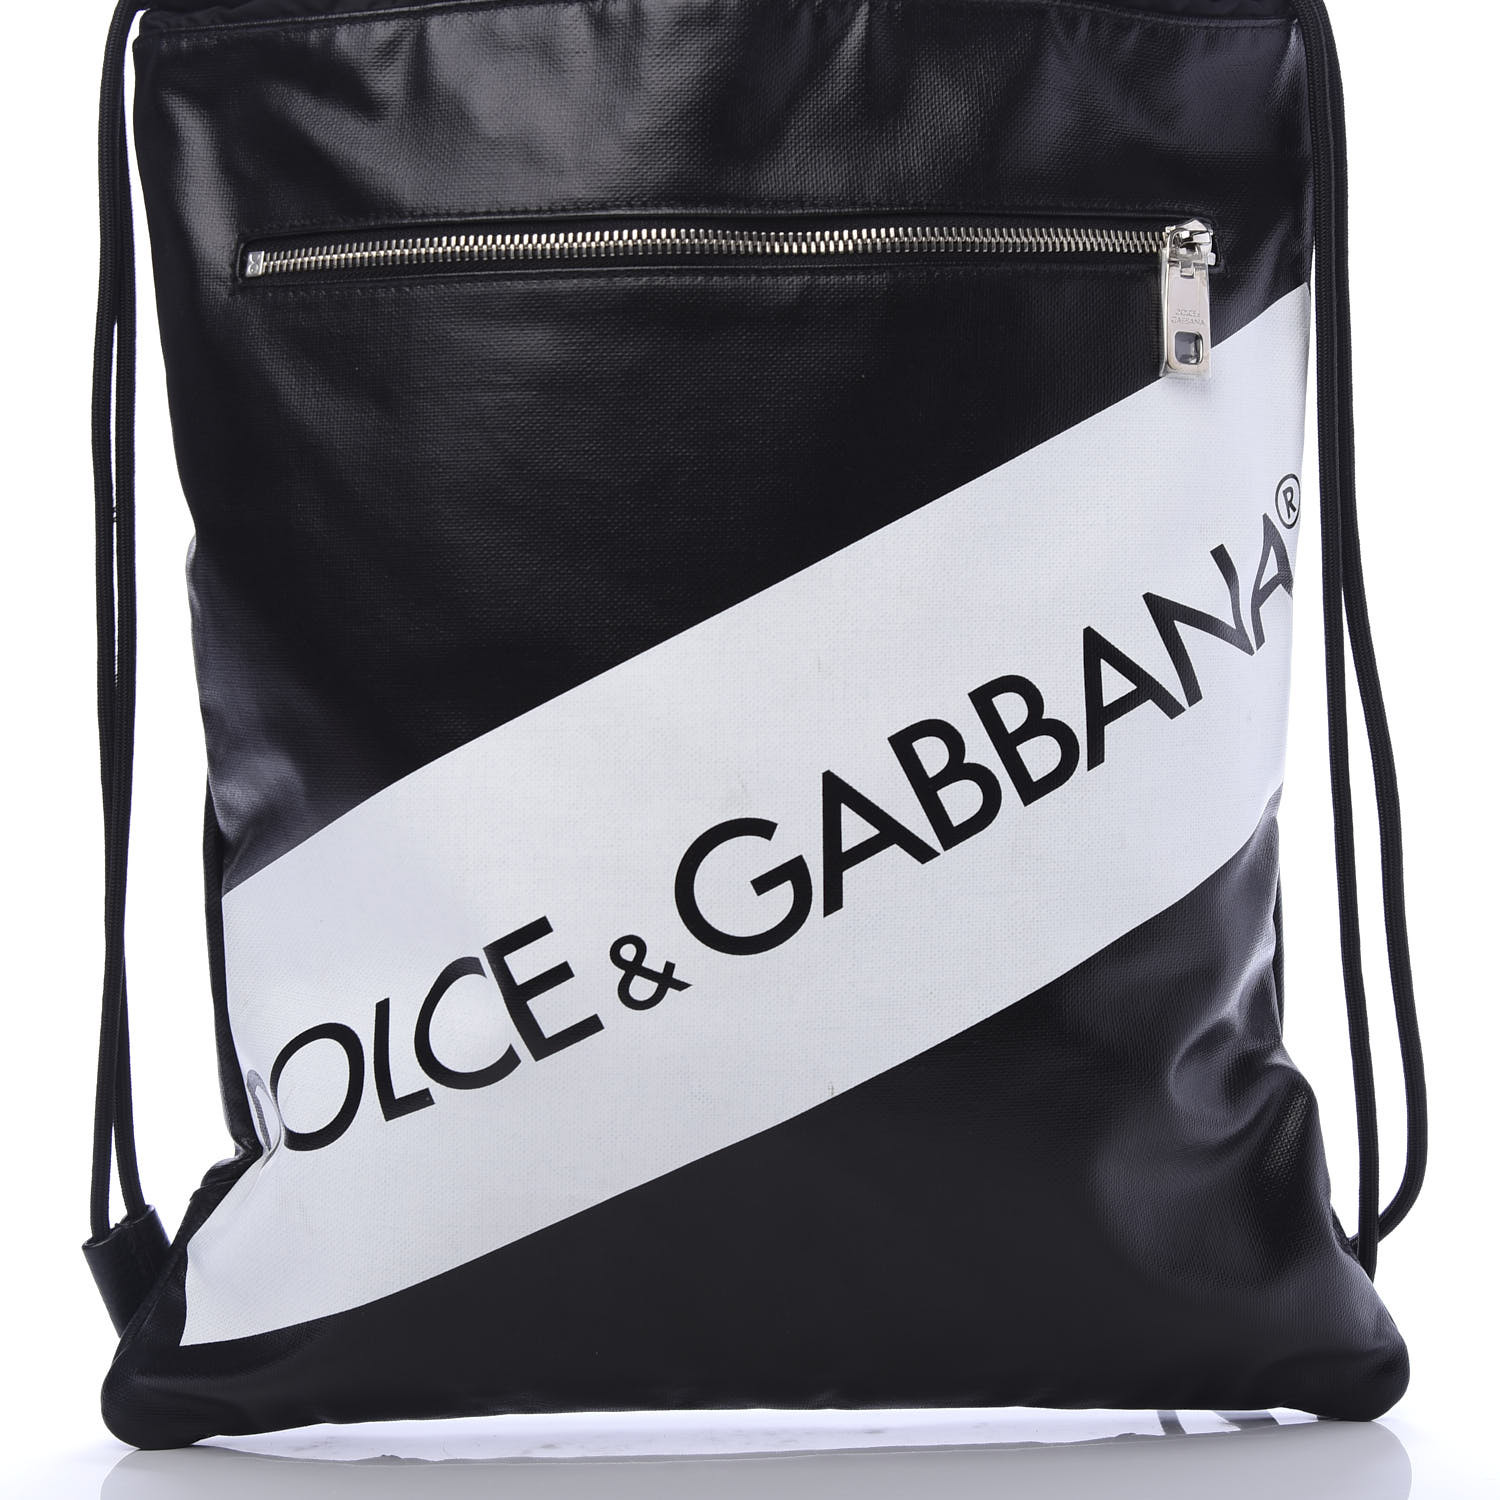 dolce and gabbana drawstring bag